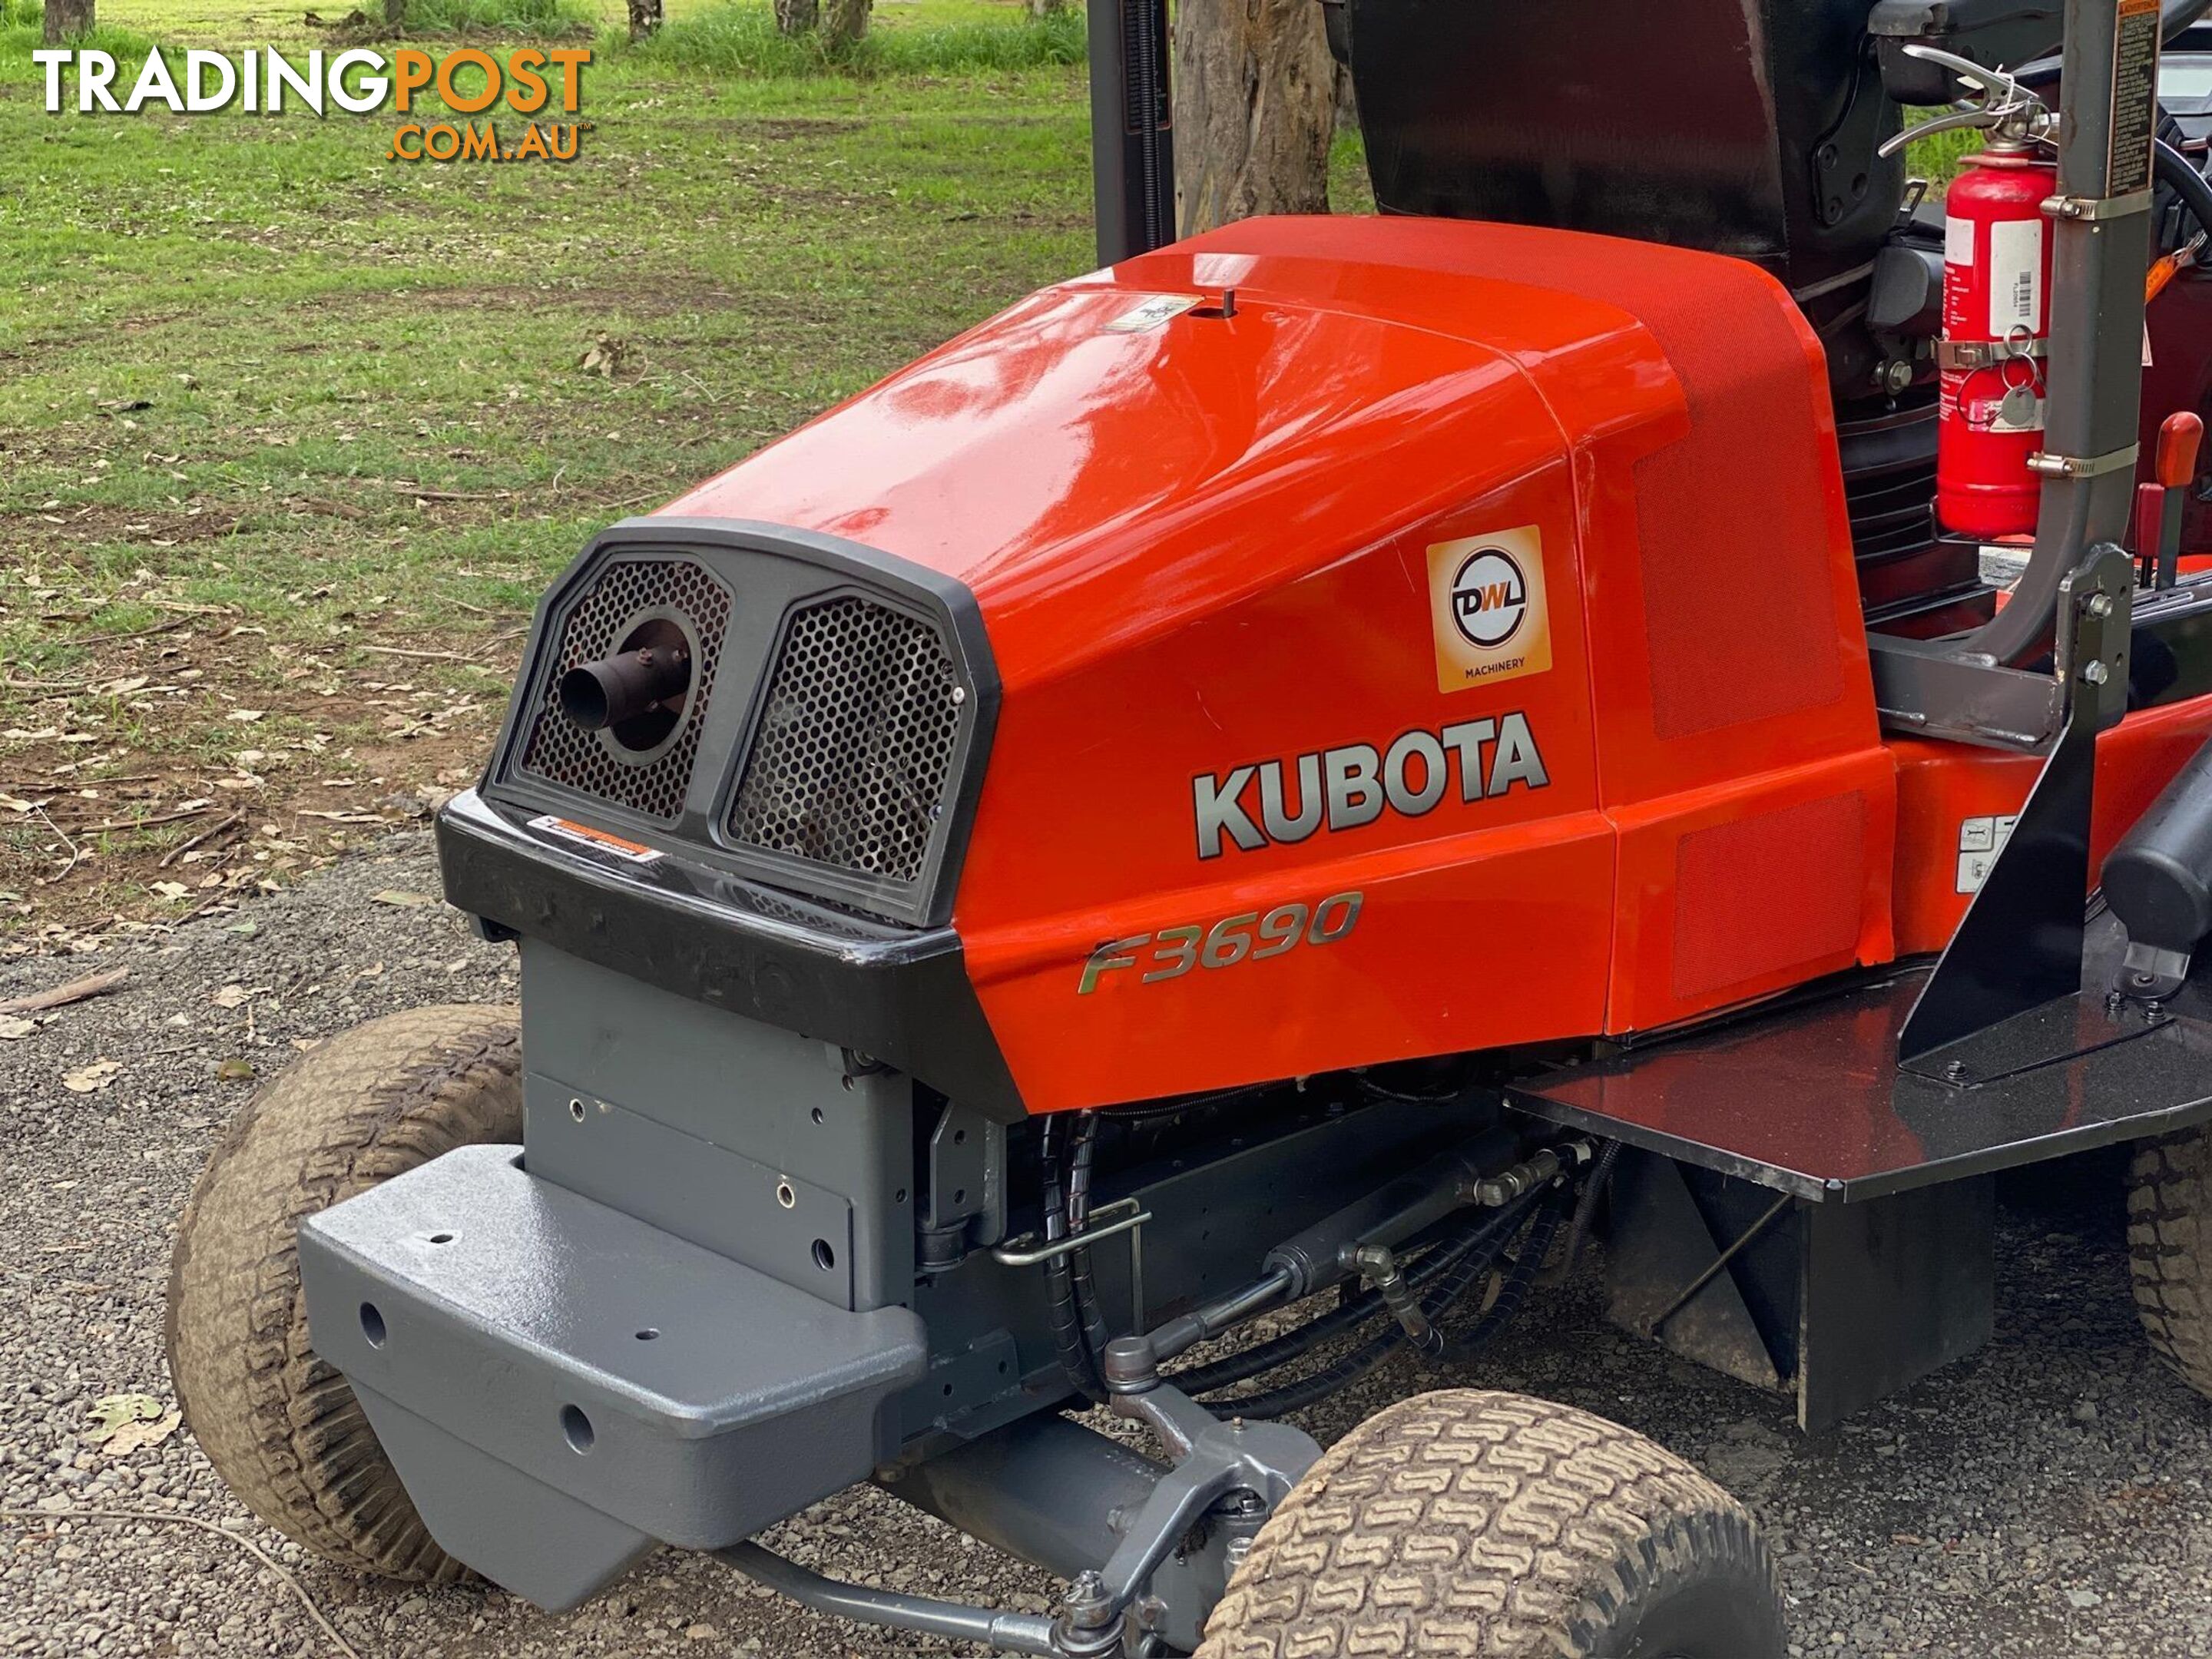 Kubota F3690 Front Deck Lawn Equipment